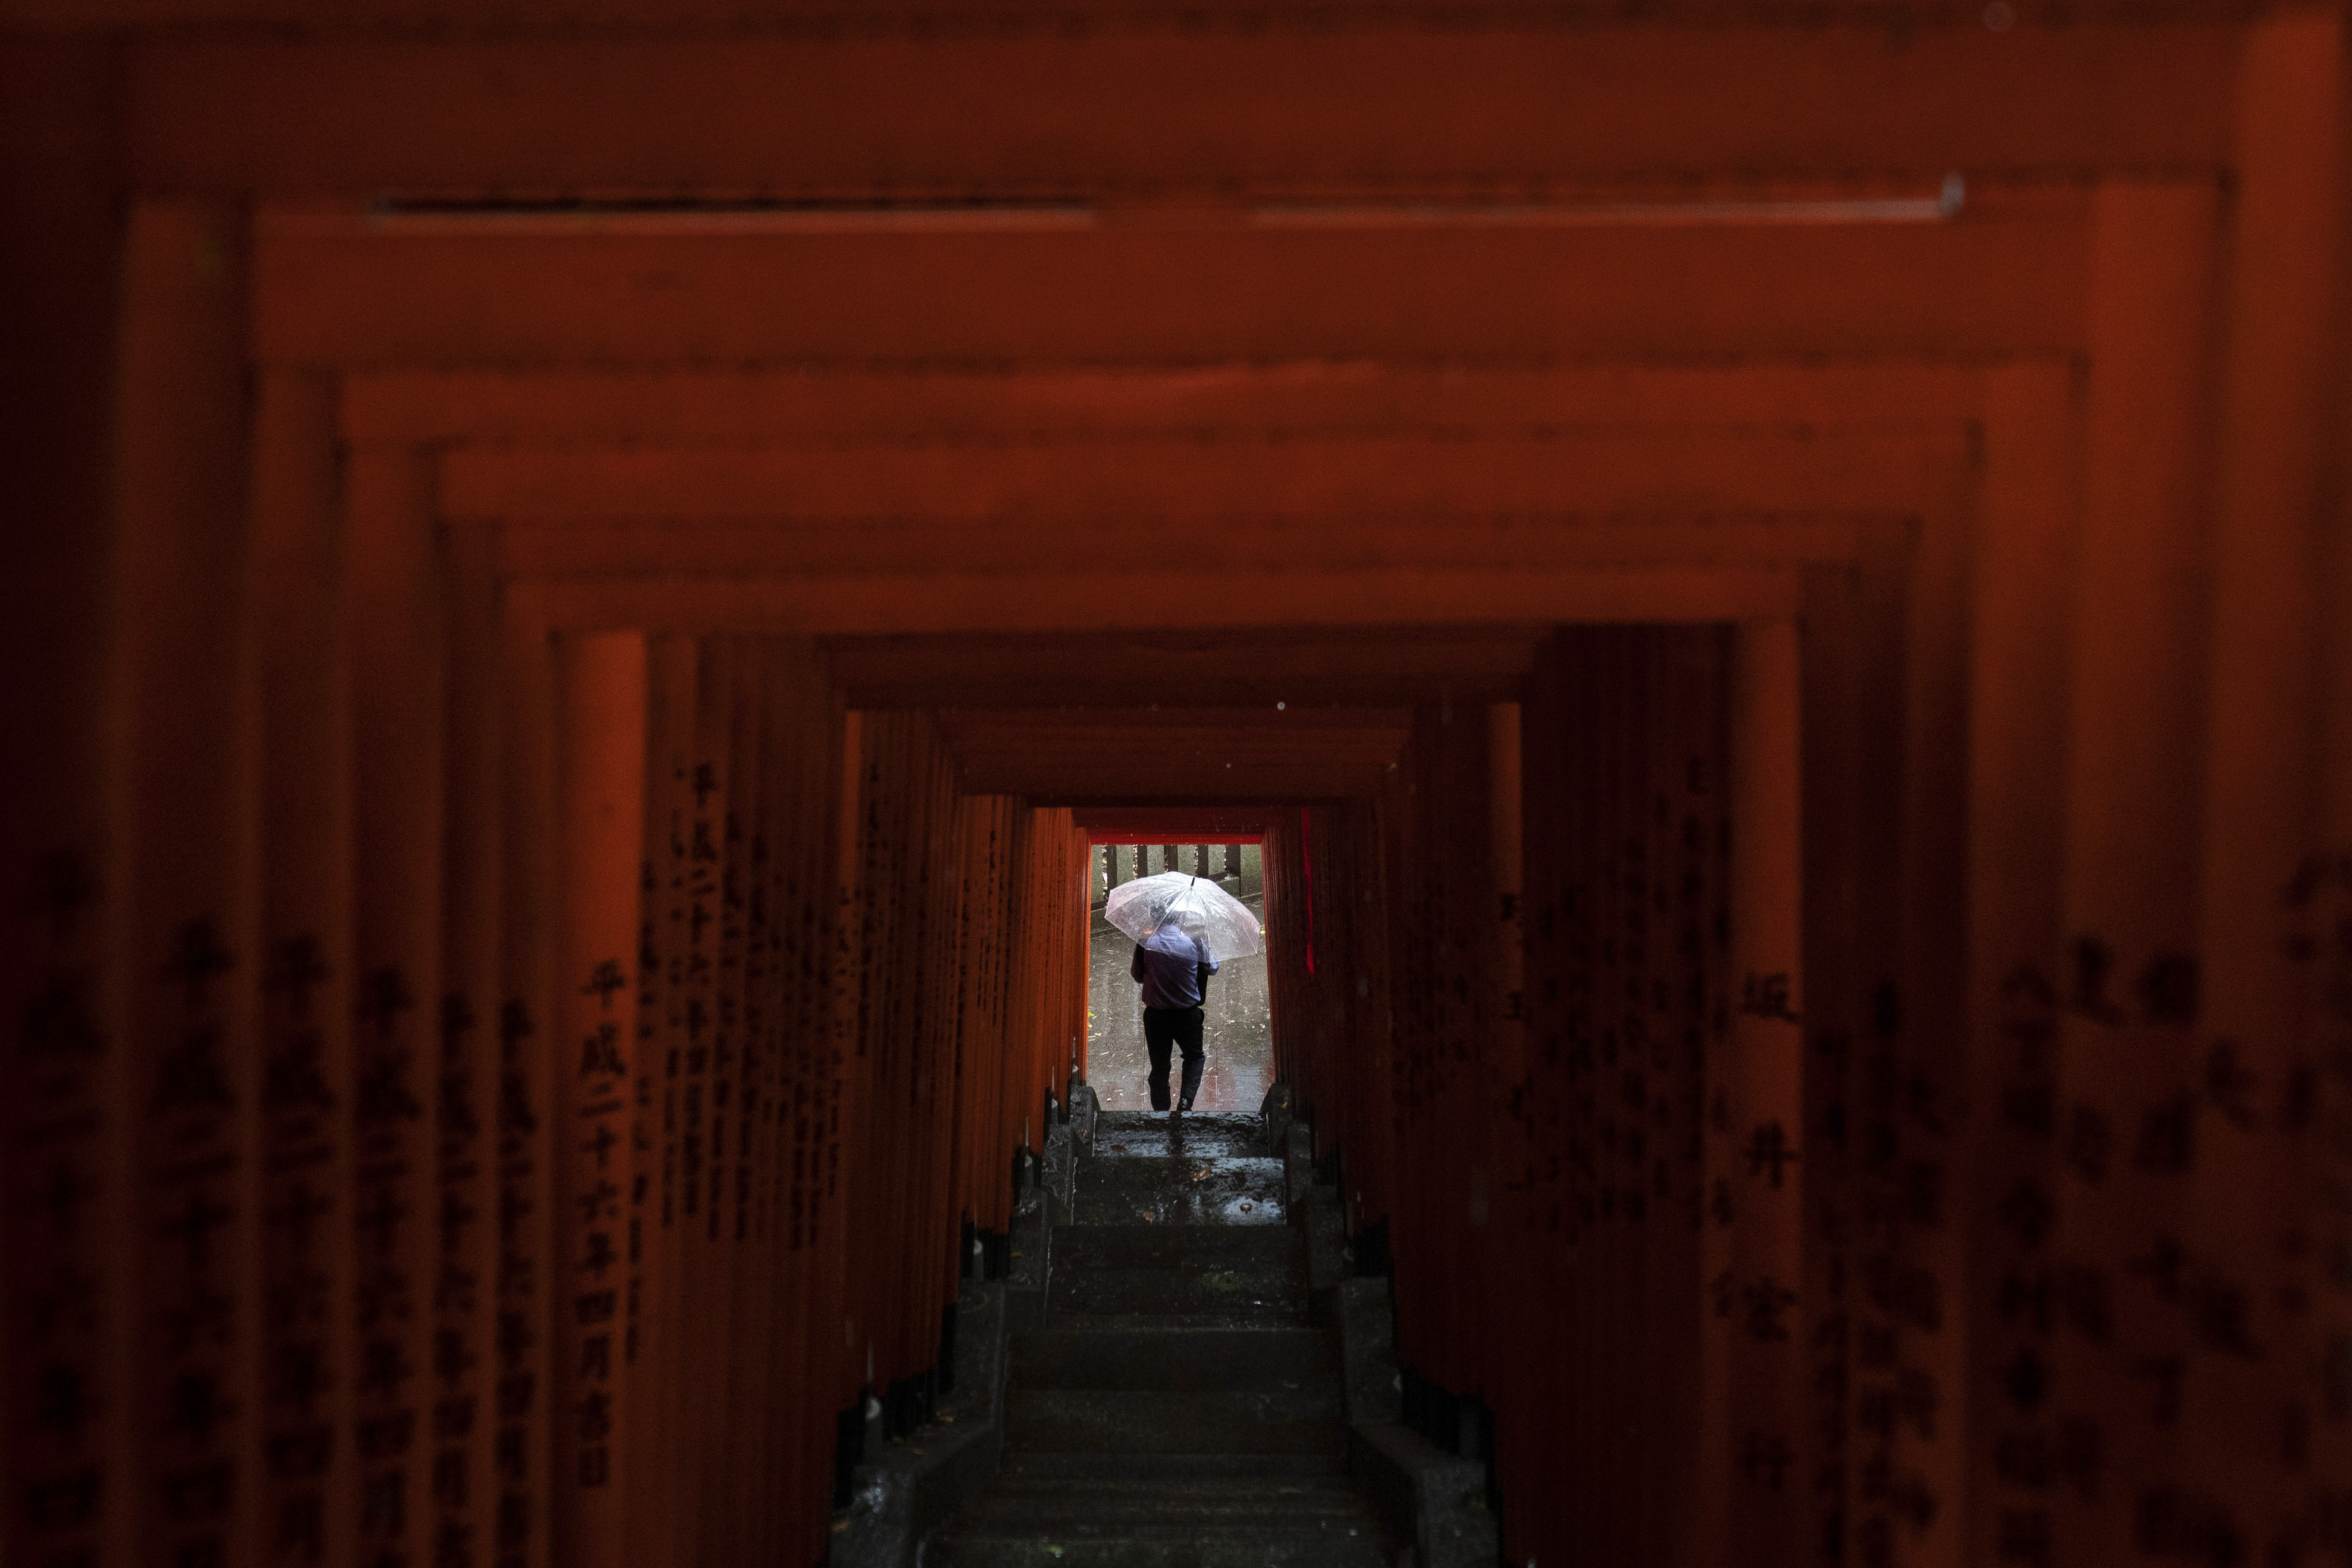 A man with an umbrella walks through a tunnel of torii gates at the Hie Shrine Monday, June 10, 2019, in Tokyo as the region enters a rainy season. (AP Photo/Jae C. Hong)